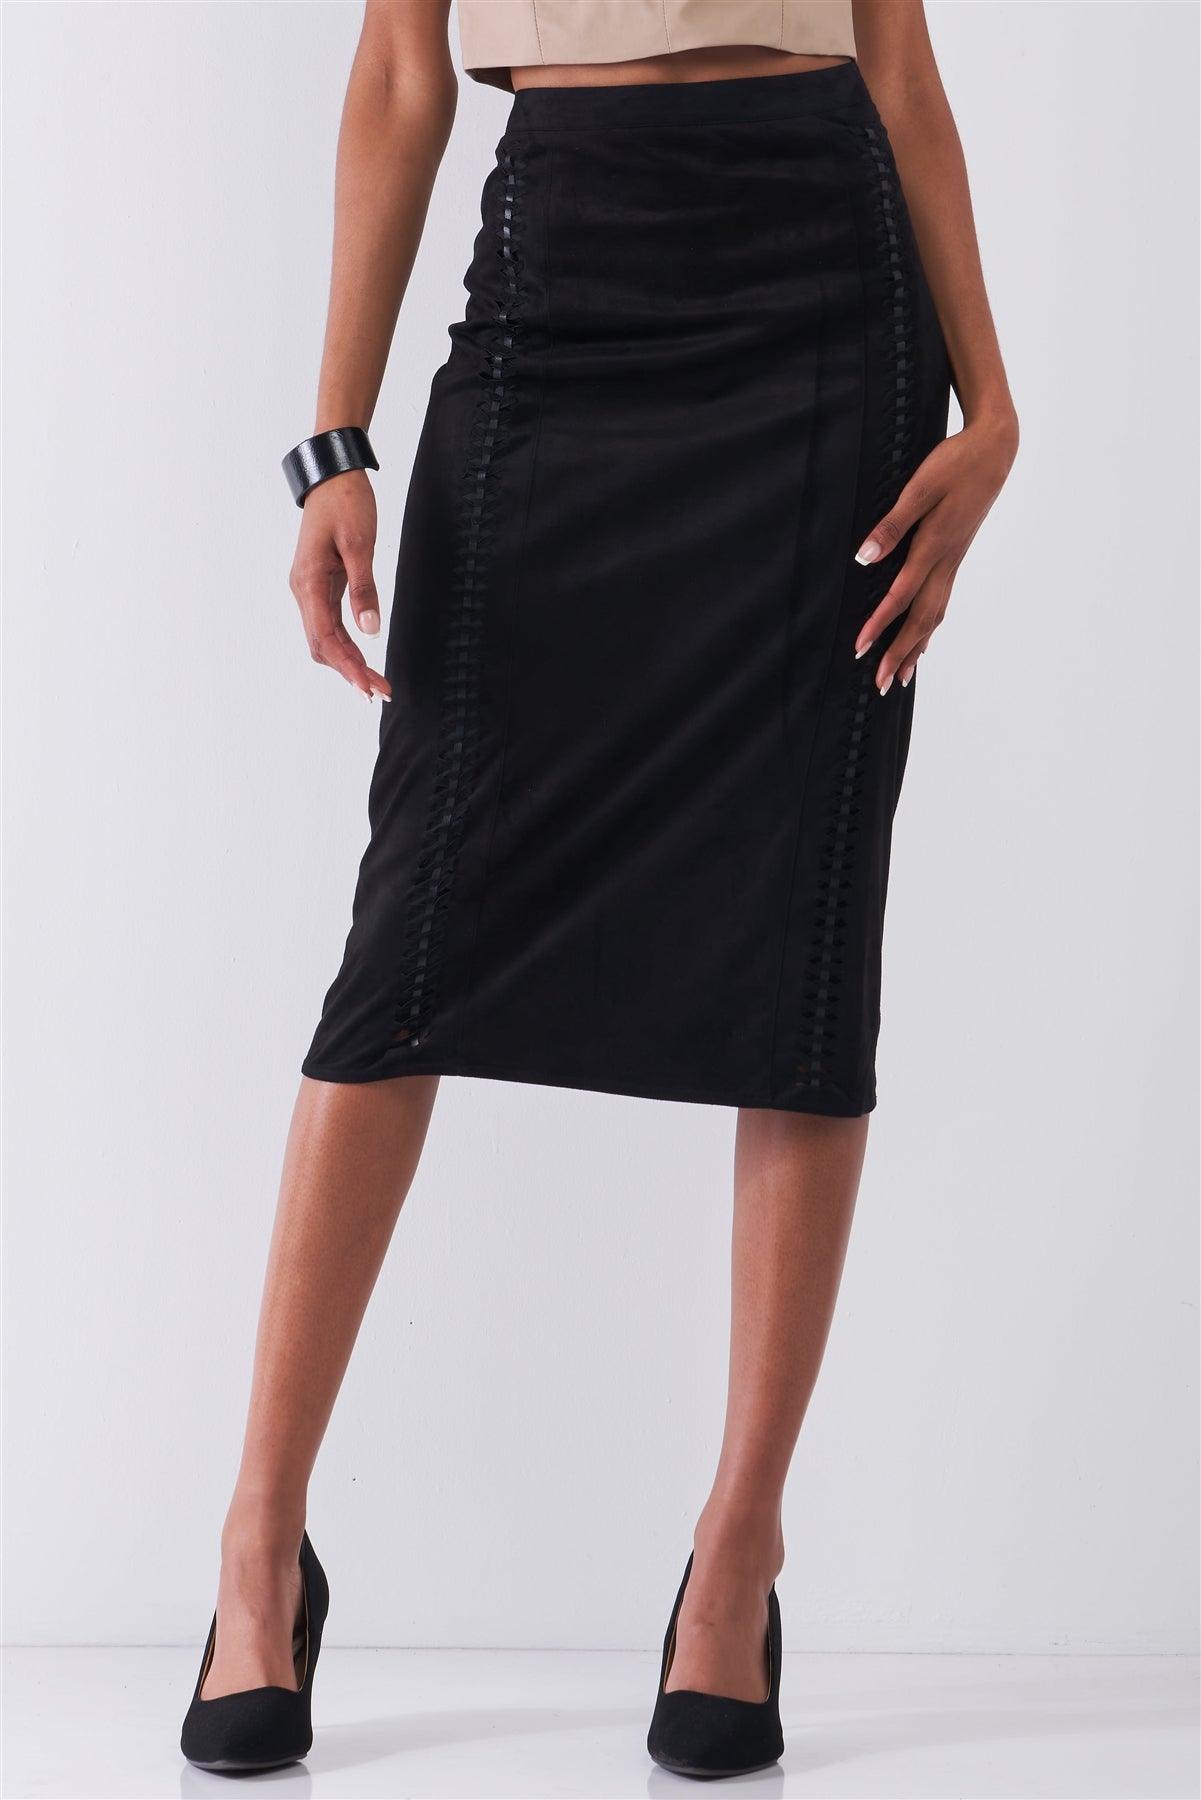 Black Suede High-Waist Side Trim Detail Pencil Fit Midi Skirt /1-2-2-1